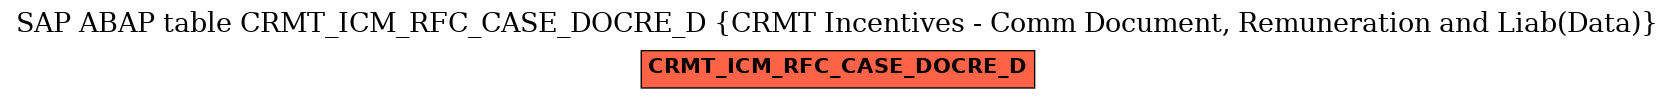 E-R Diagram for table CRMT_ICM_RFC_CASE_DOCRE_D (CRMT Incentives - Comm Document, Remuneration and Liab(Data))